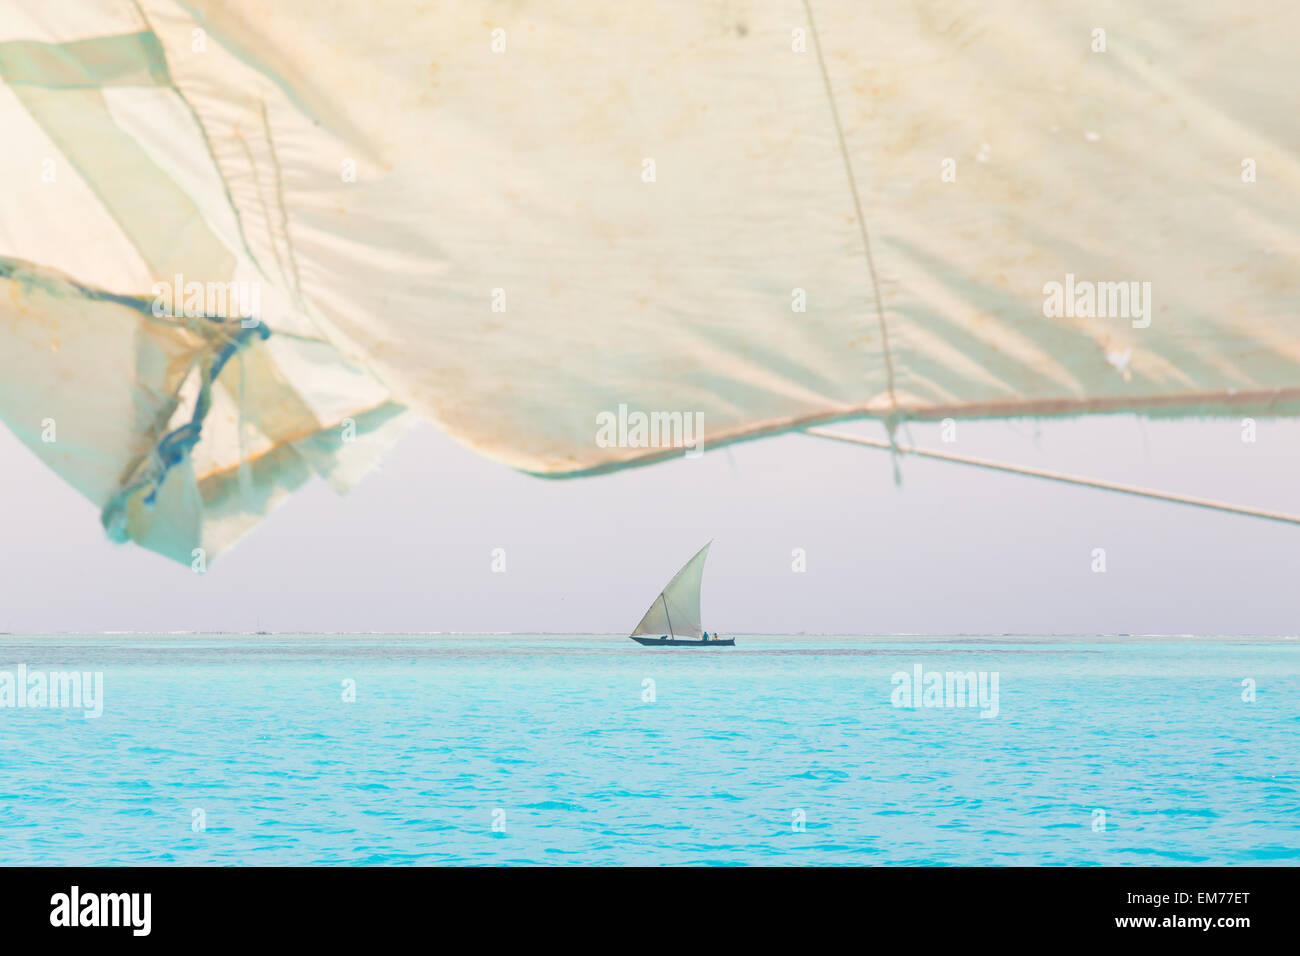 Traditional wooden sailboat sailing on horizon. Stock Photo